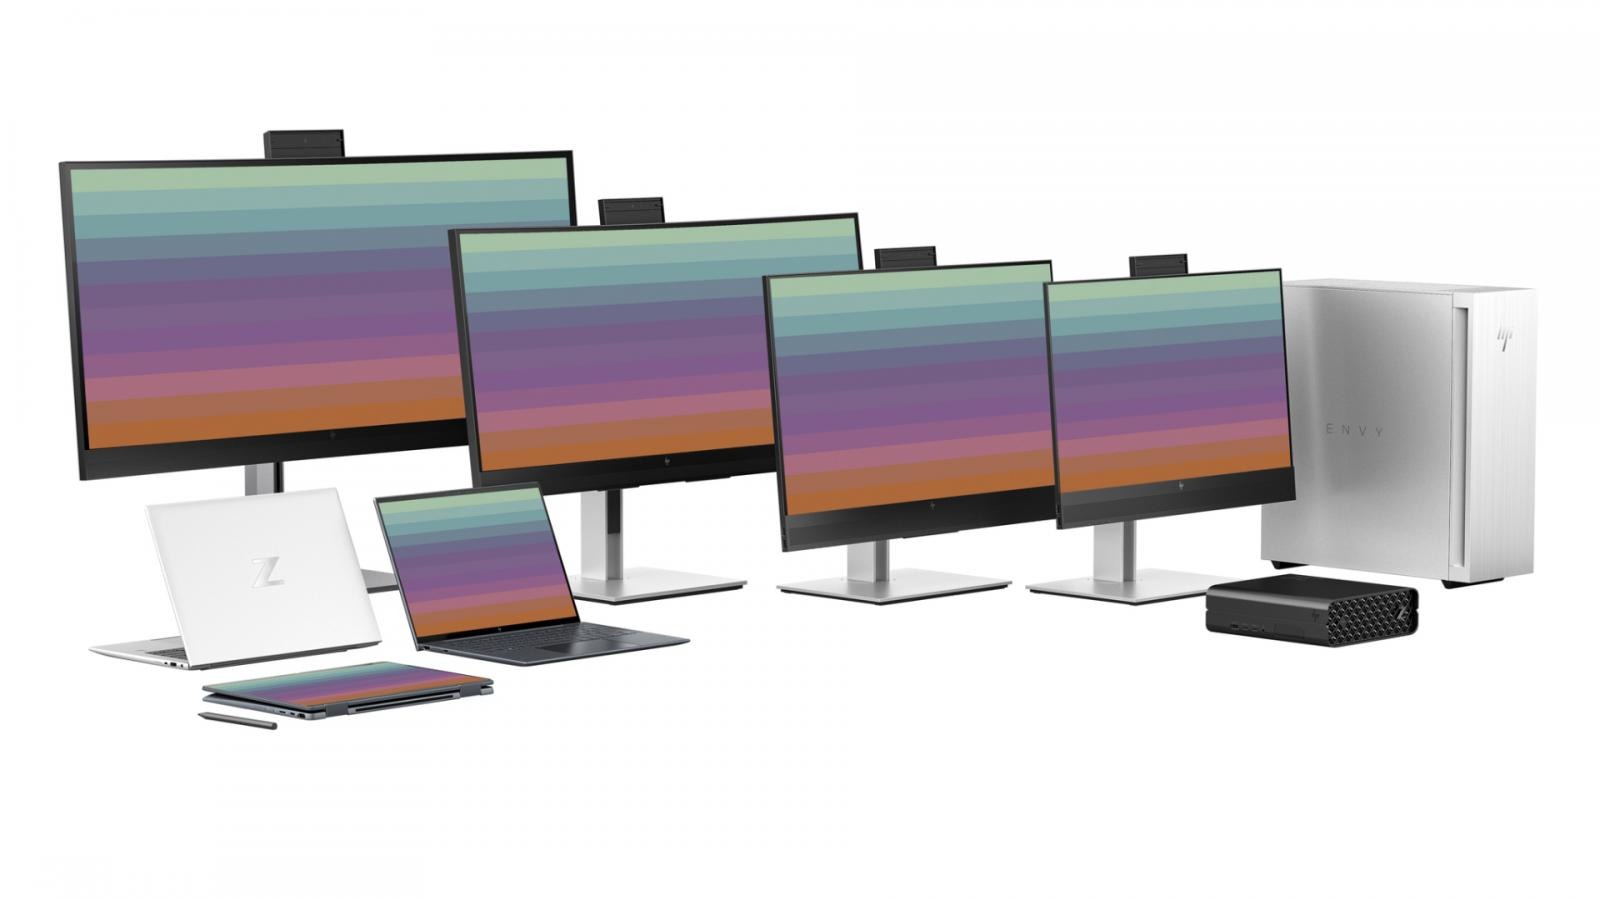 HP new monitors desktops lapto